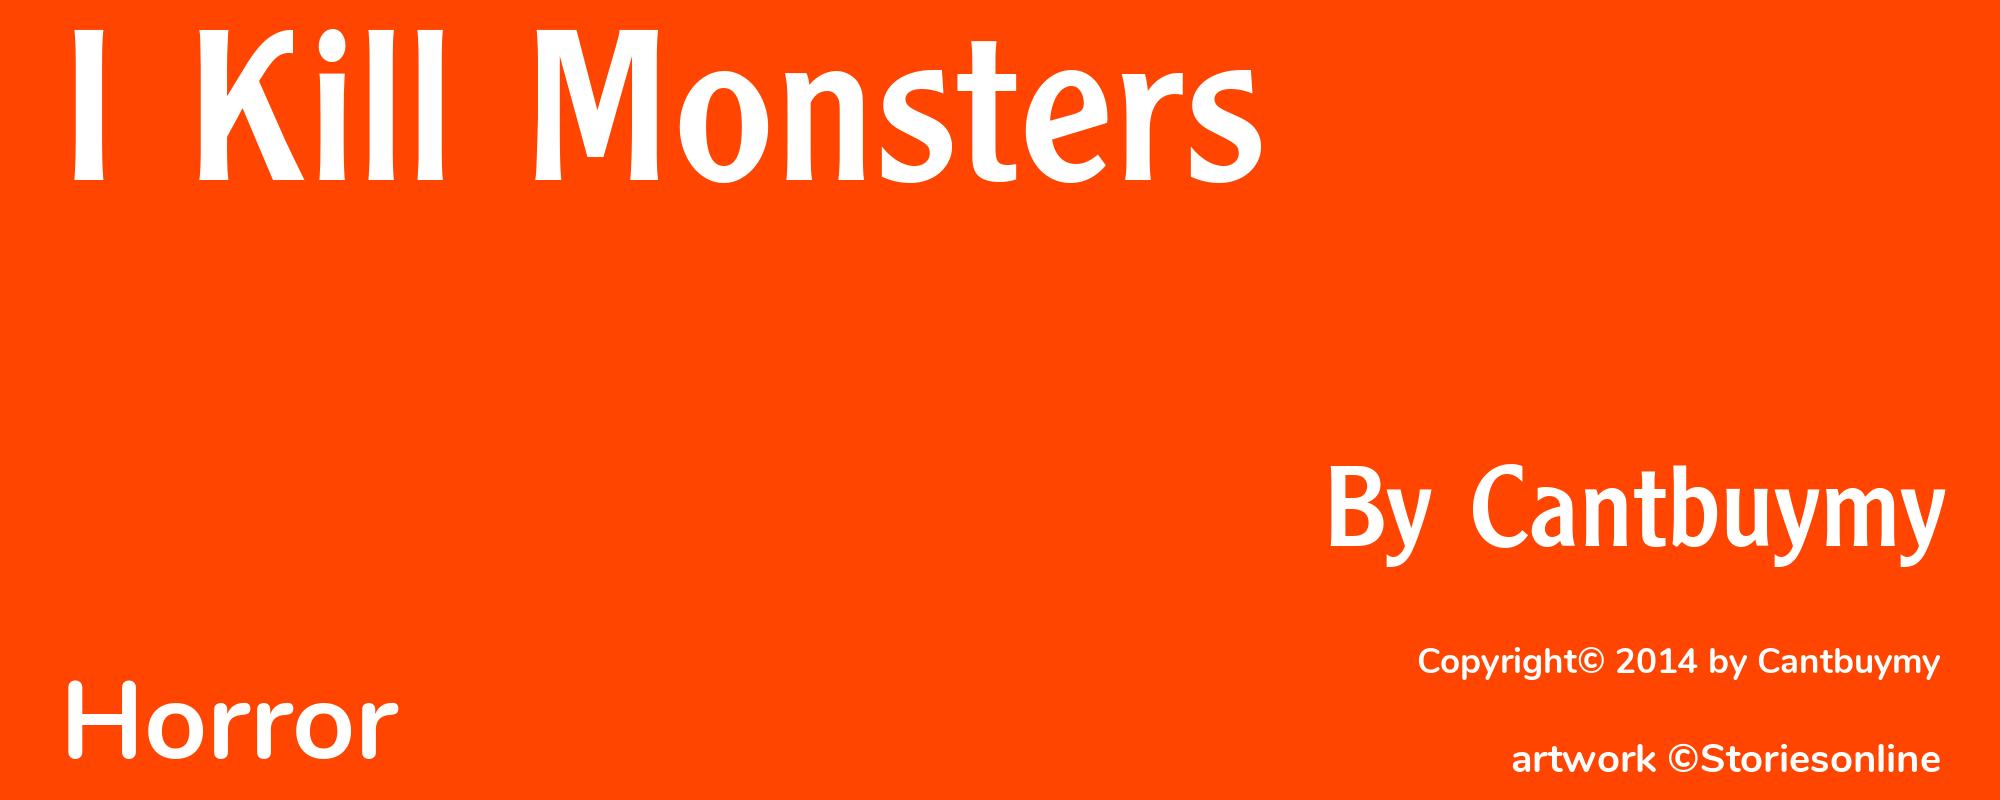 I Kill Monsters - Cover